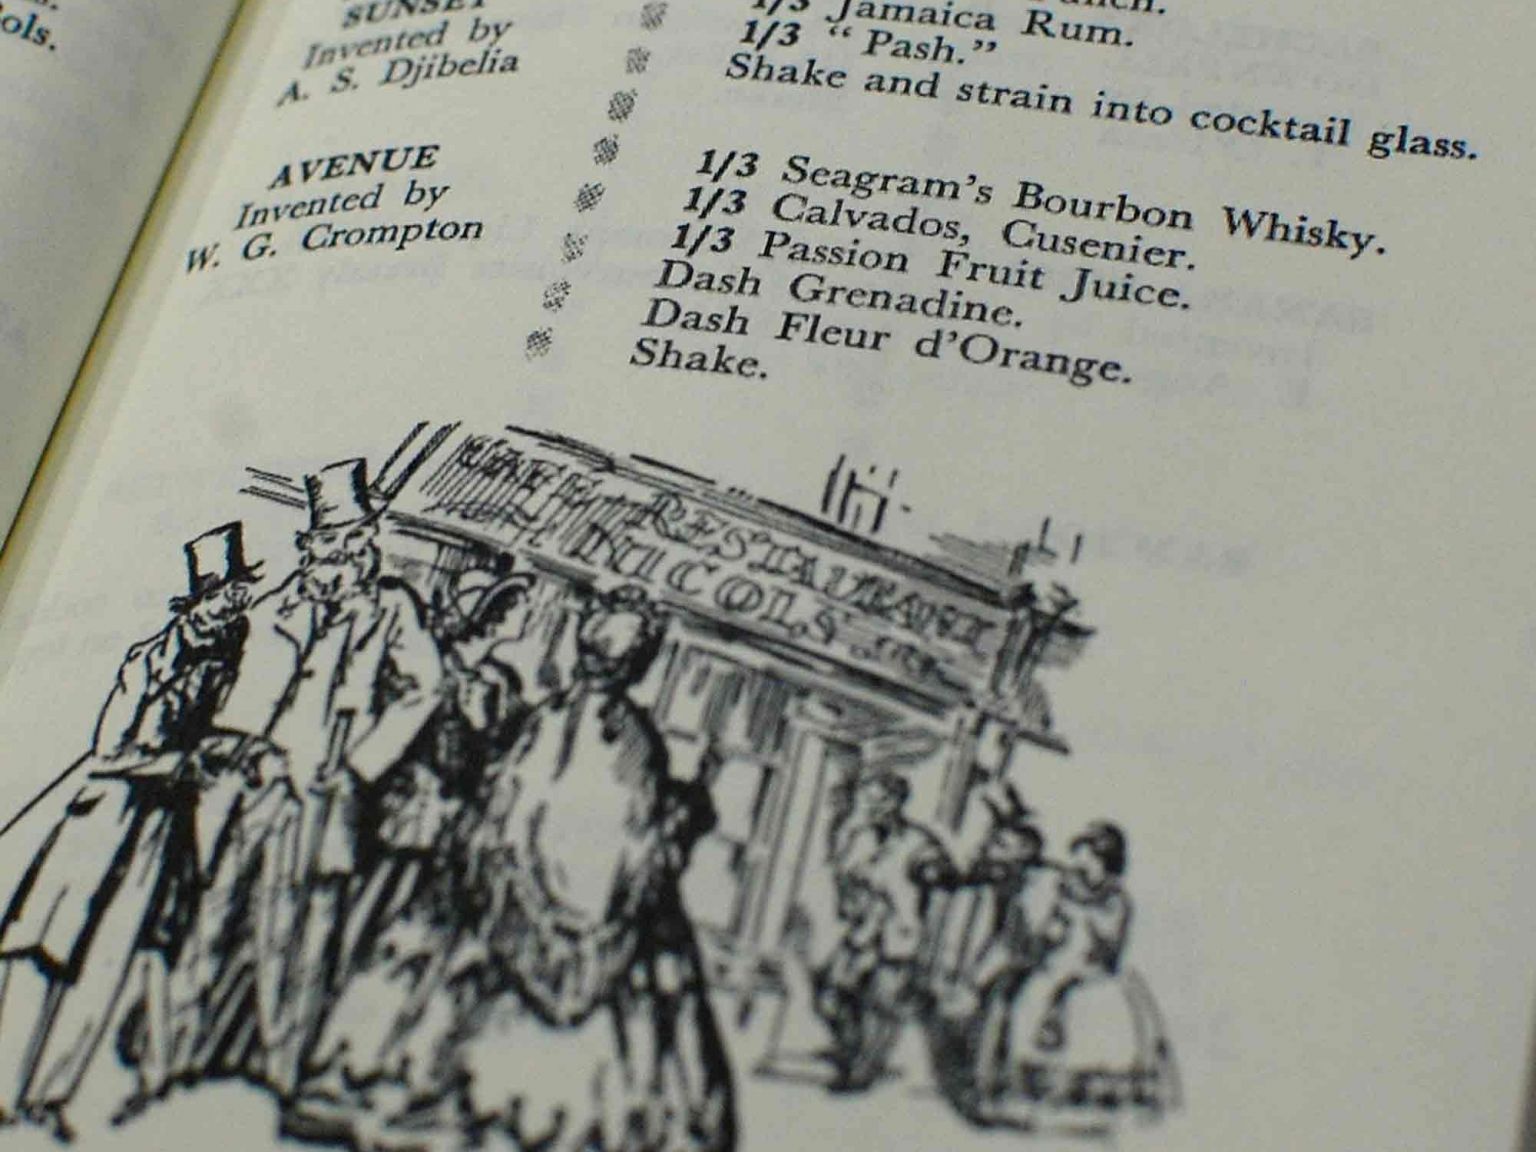 cafe royal cocktail book